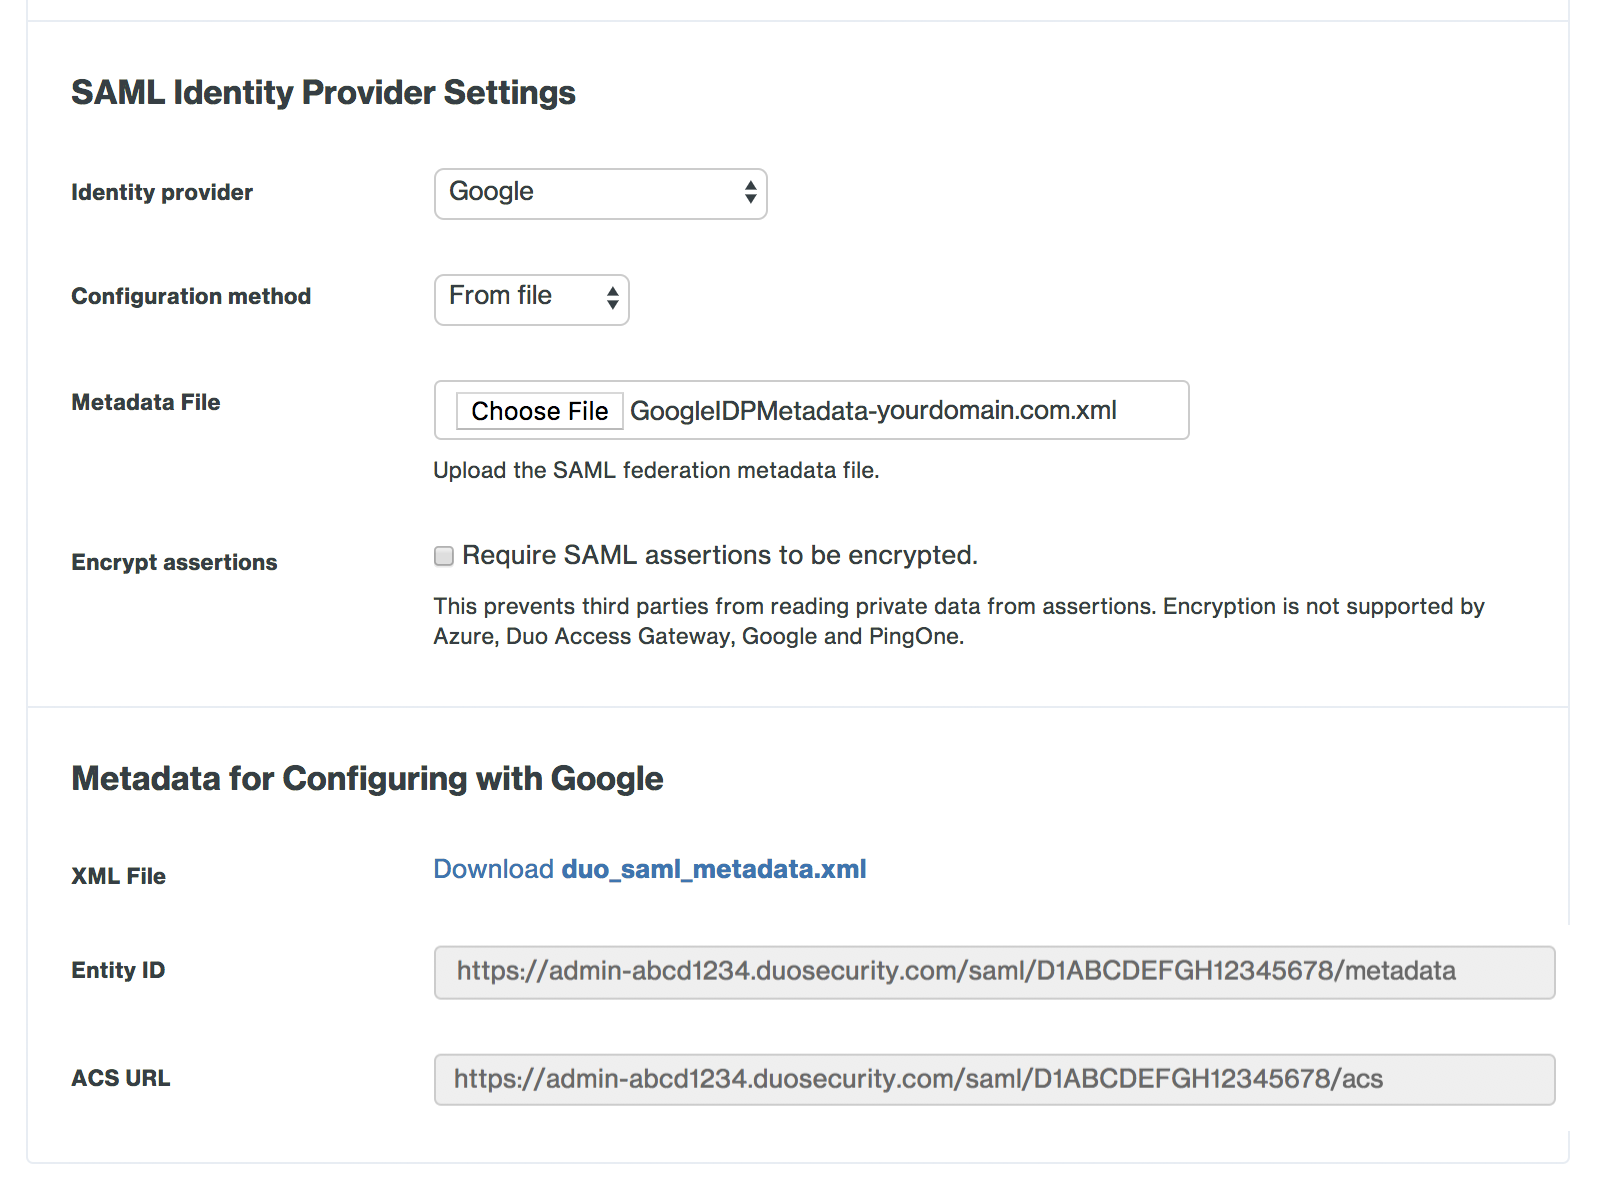 Duo Admin Panel Google SAML Identity Provider Settings